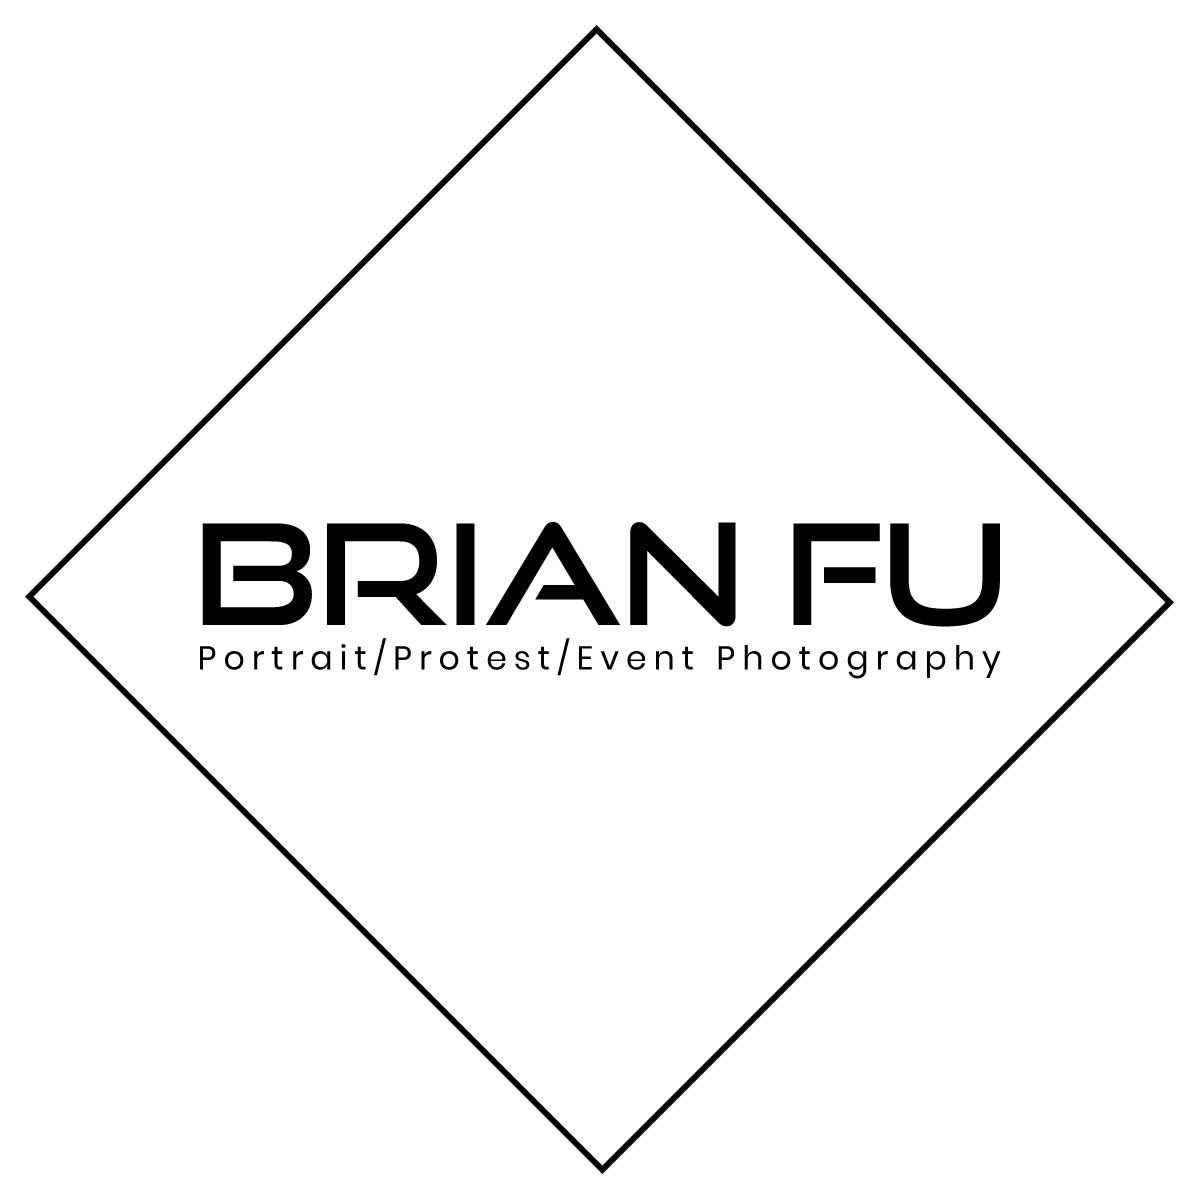 BrianFu logo